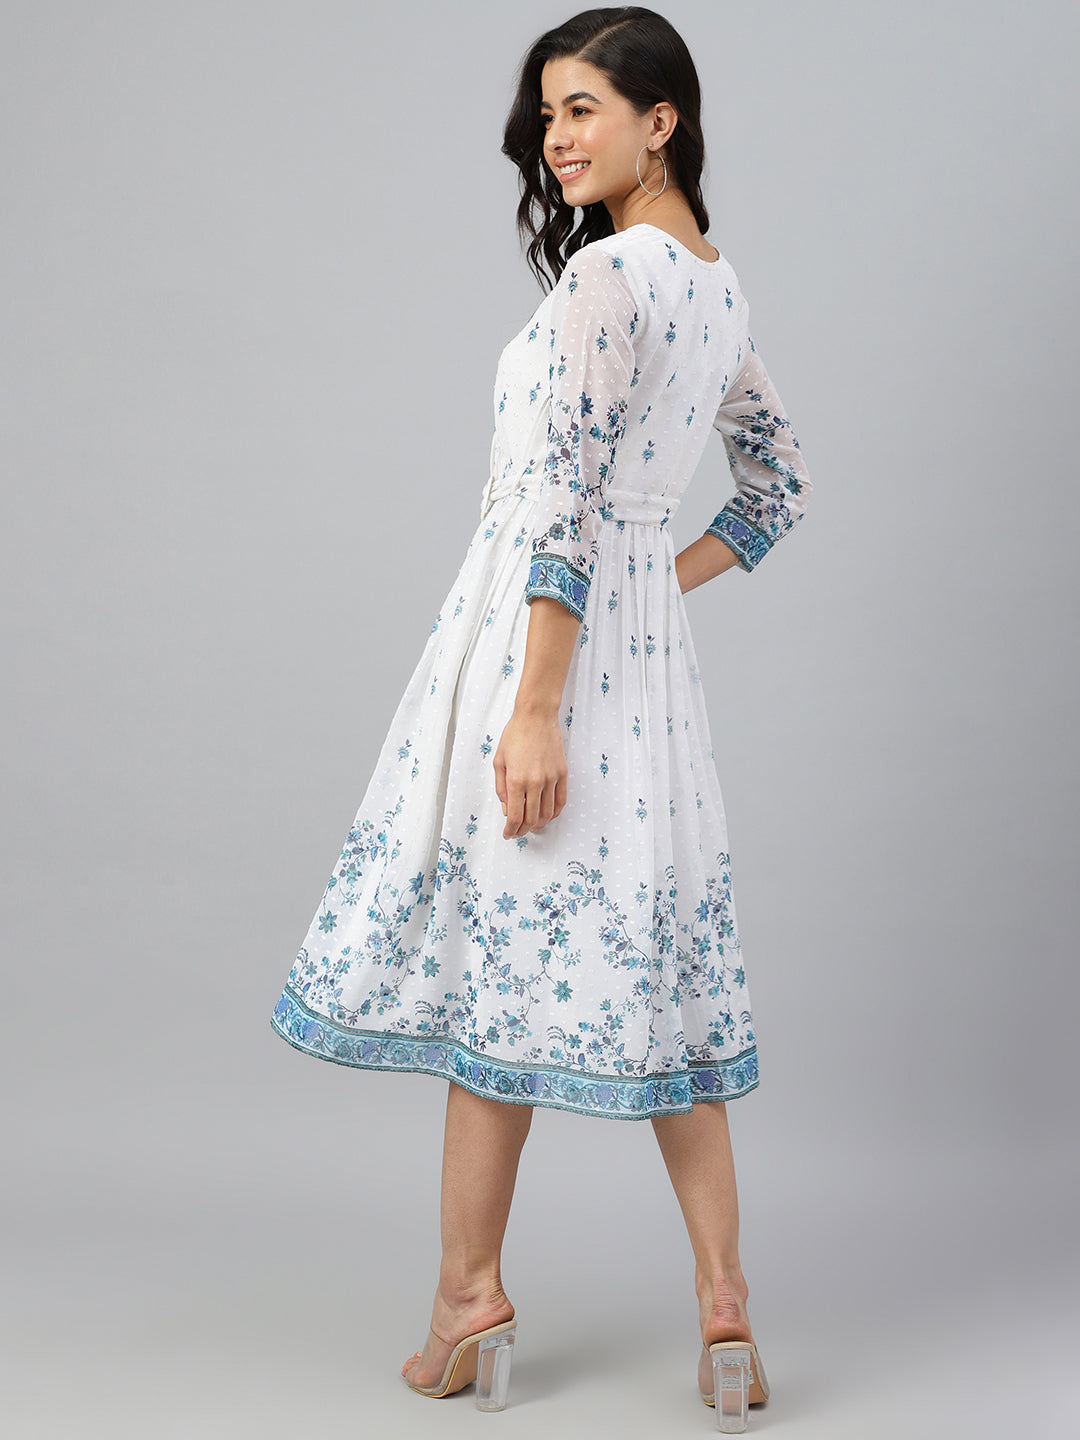 Women's Digital Printed White Georgette Dress - Janasya USA